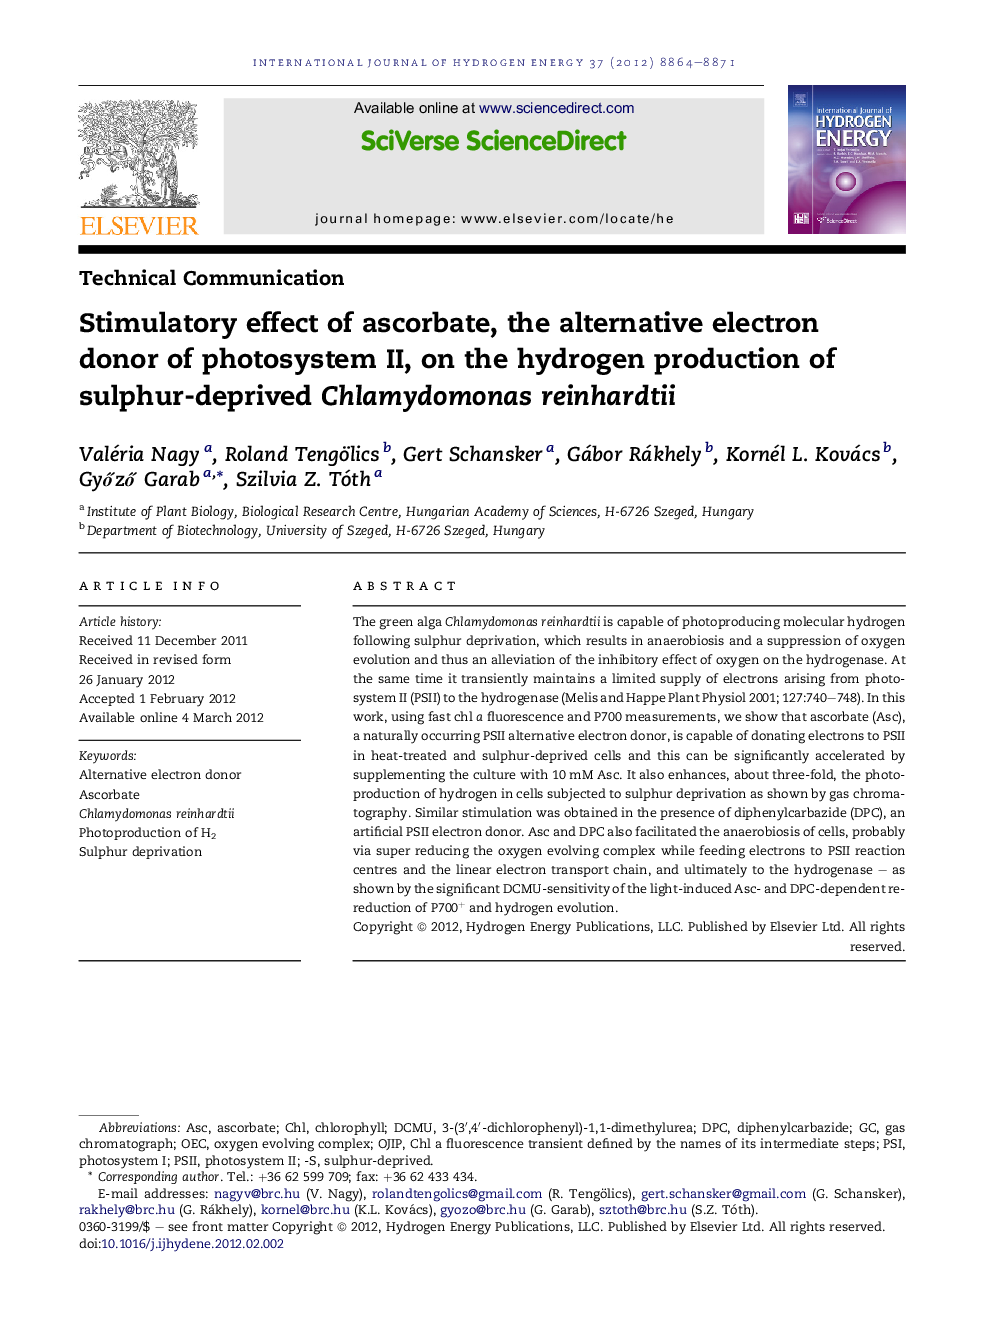 Stimulatory effect of ascorbate, the alternative electron donor of photosystem II, on the hydrogen production of sulphur-deprived Chlamydomonas reinhardtii